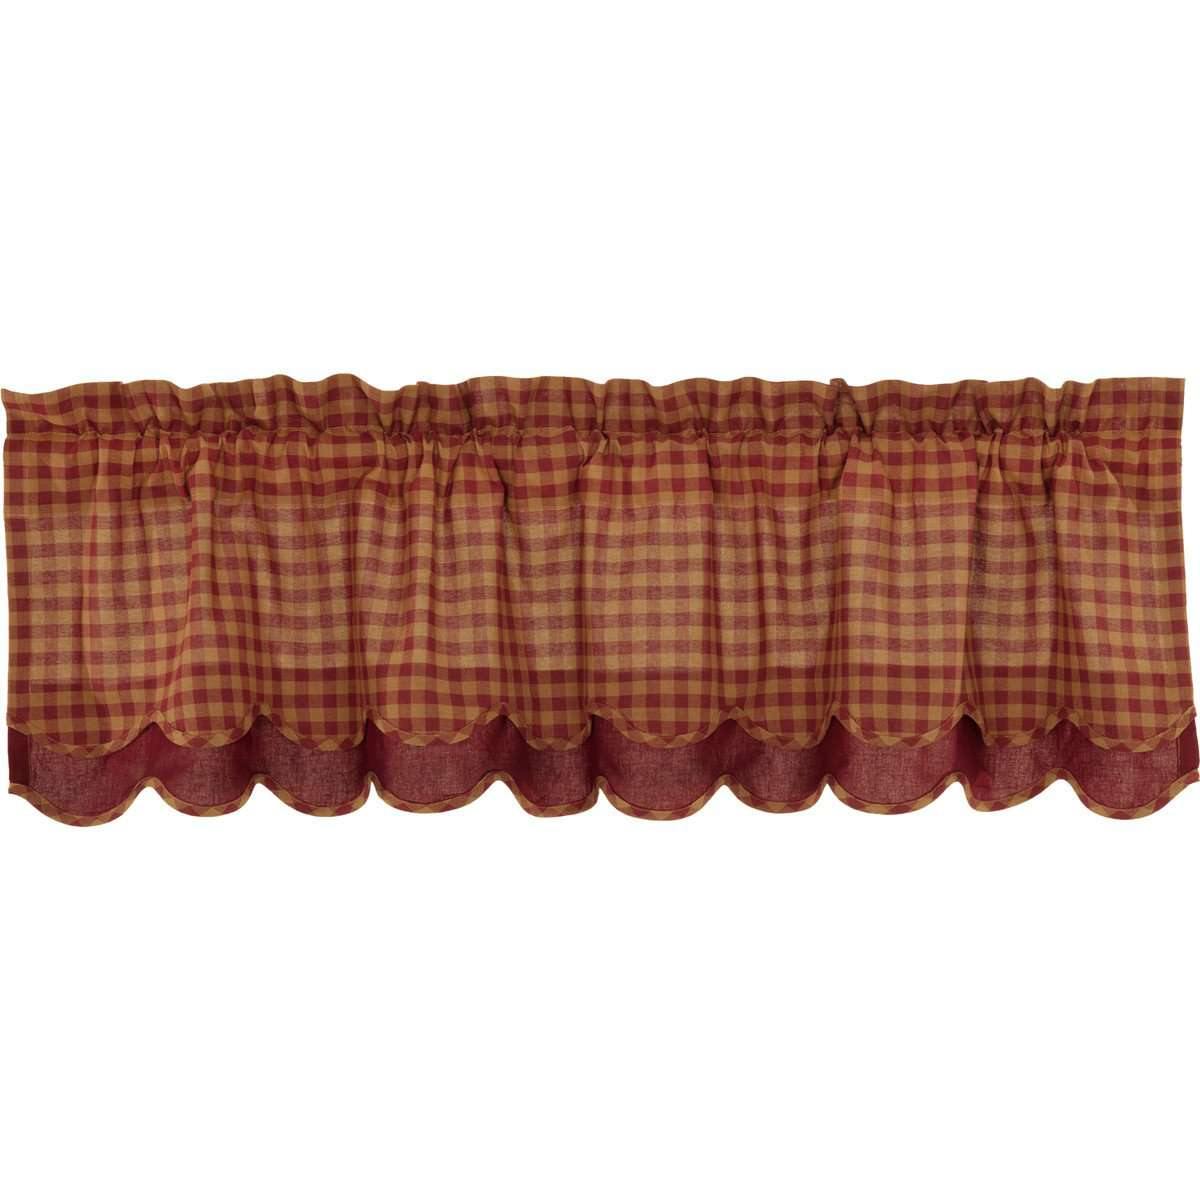 Burgundy Check Scalloped Layered Valance Curtain 16x60 VHC Brands - The Fox Decor